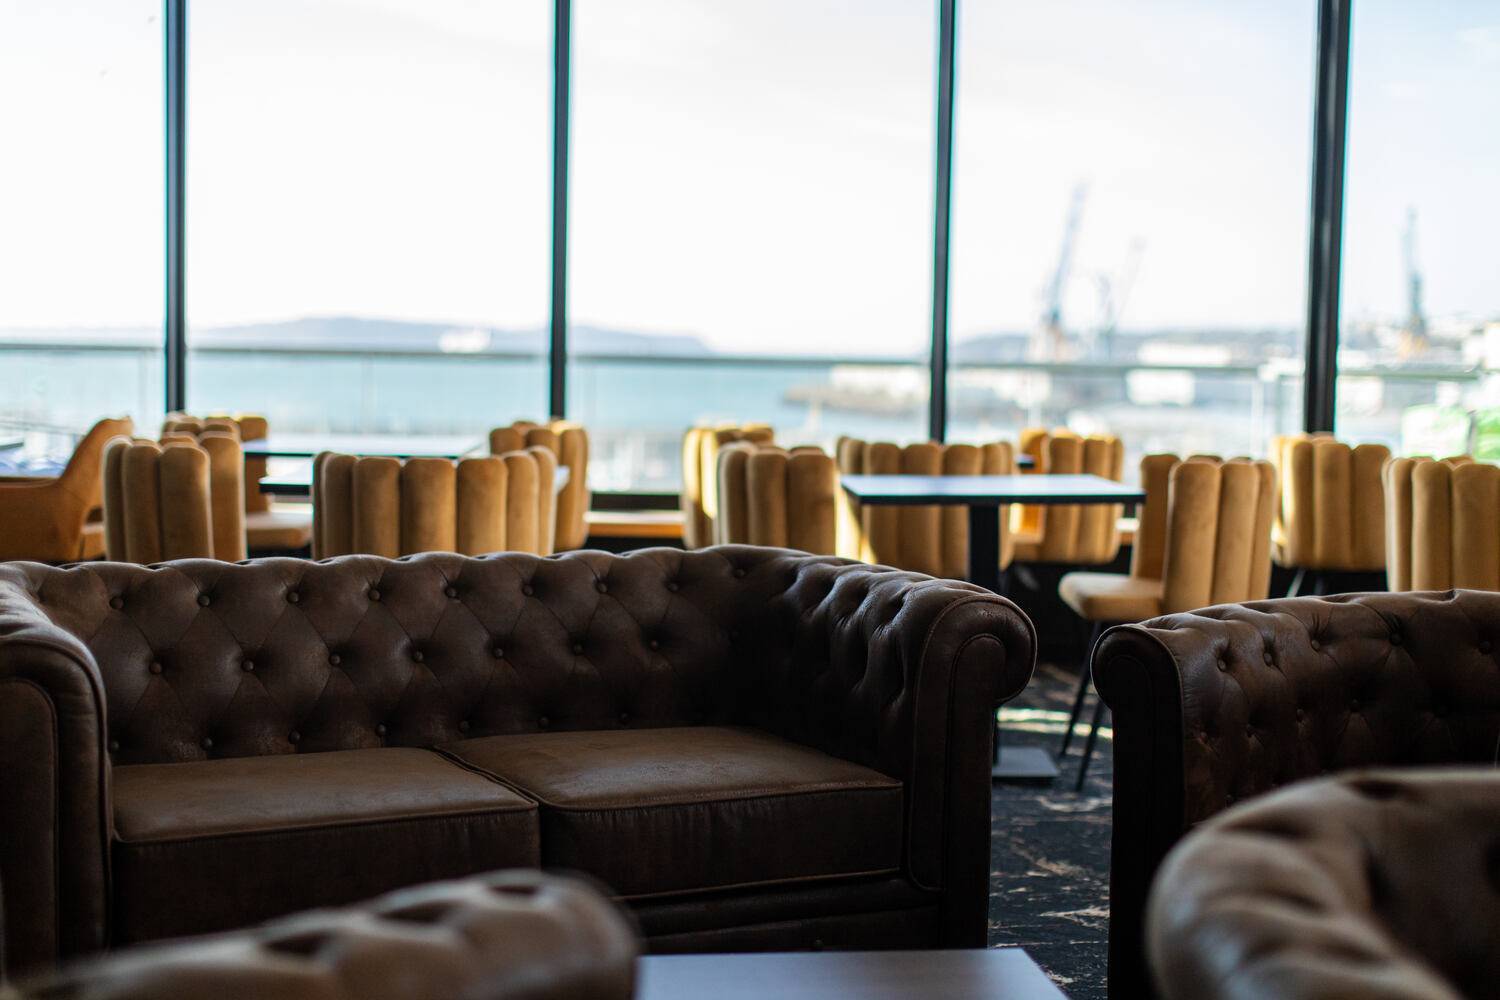 Bar with sea view in Brest | Restaurant La Croisette in Brest